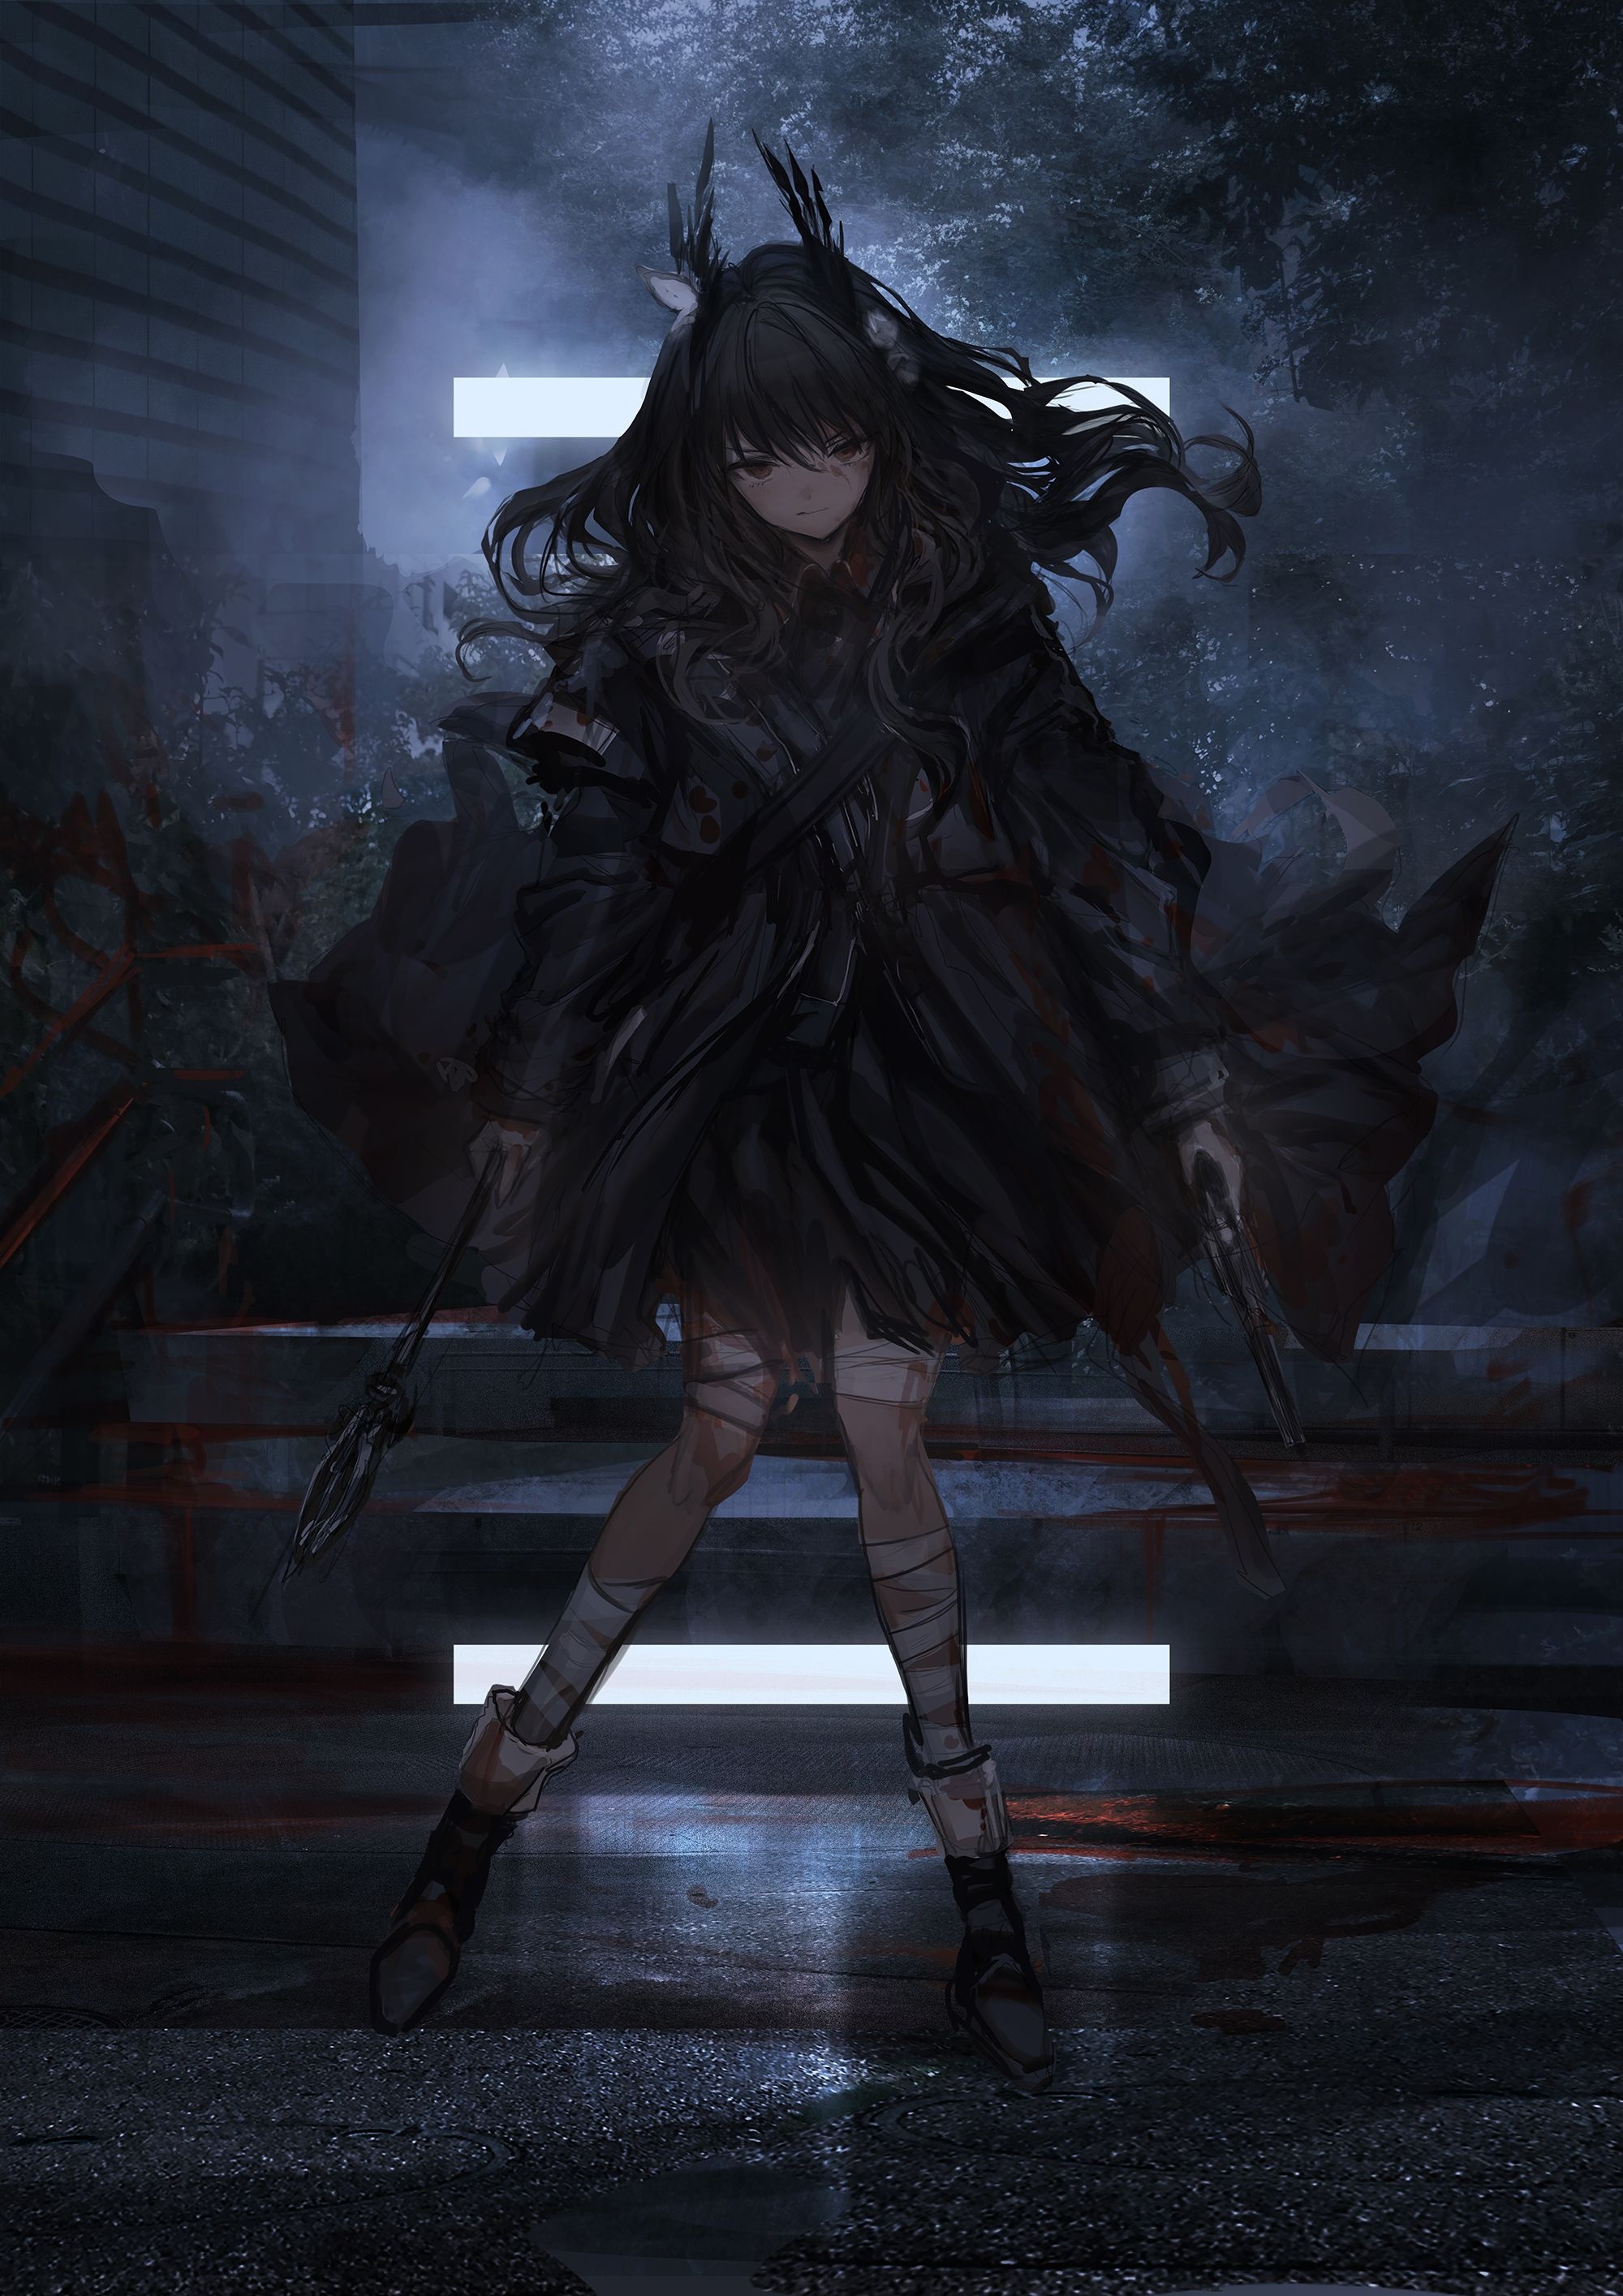 Gothic Anime: Sad gothic girl, Dark atmosphere, Night, Blood on the street, Fog. 2000x2830 HD Wallpaper.